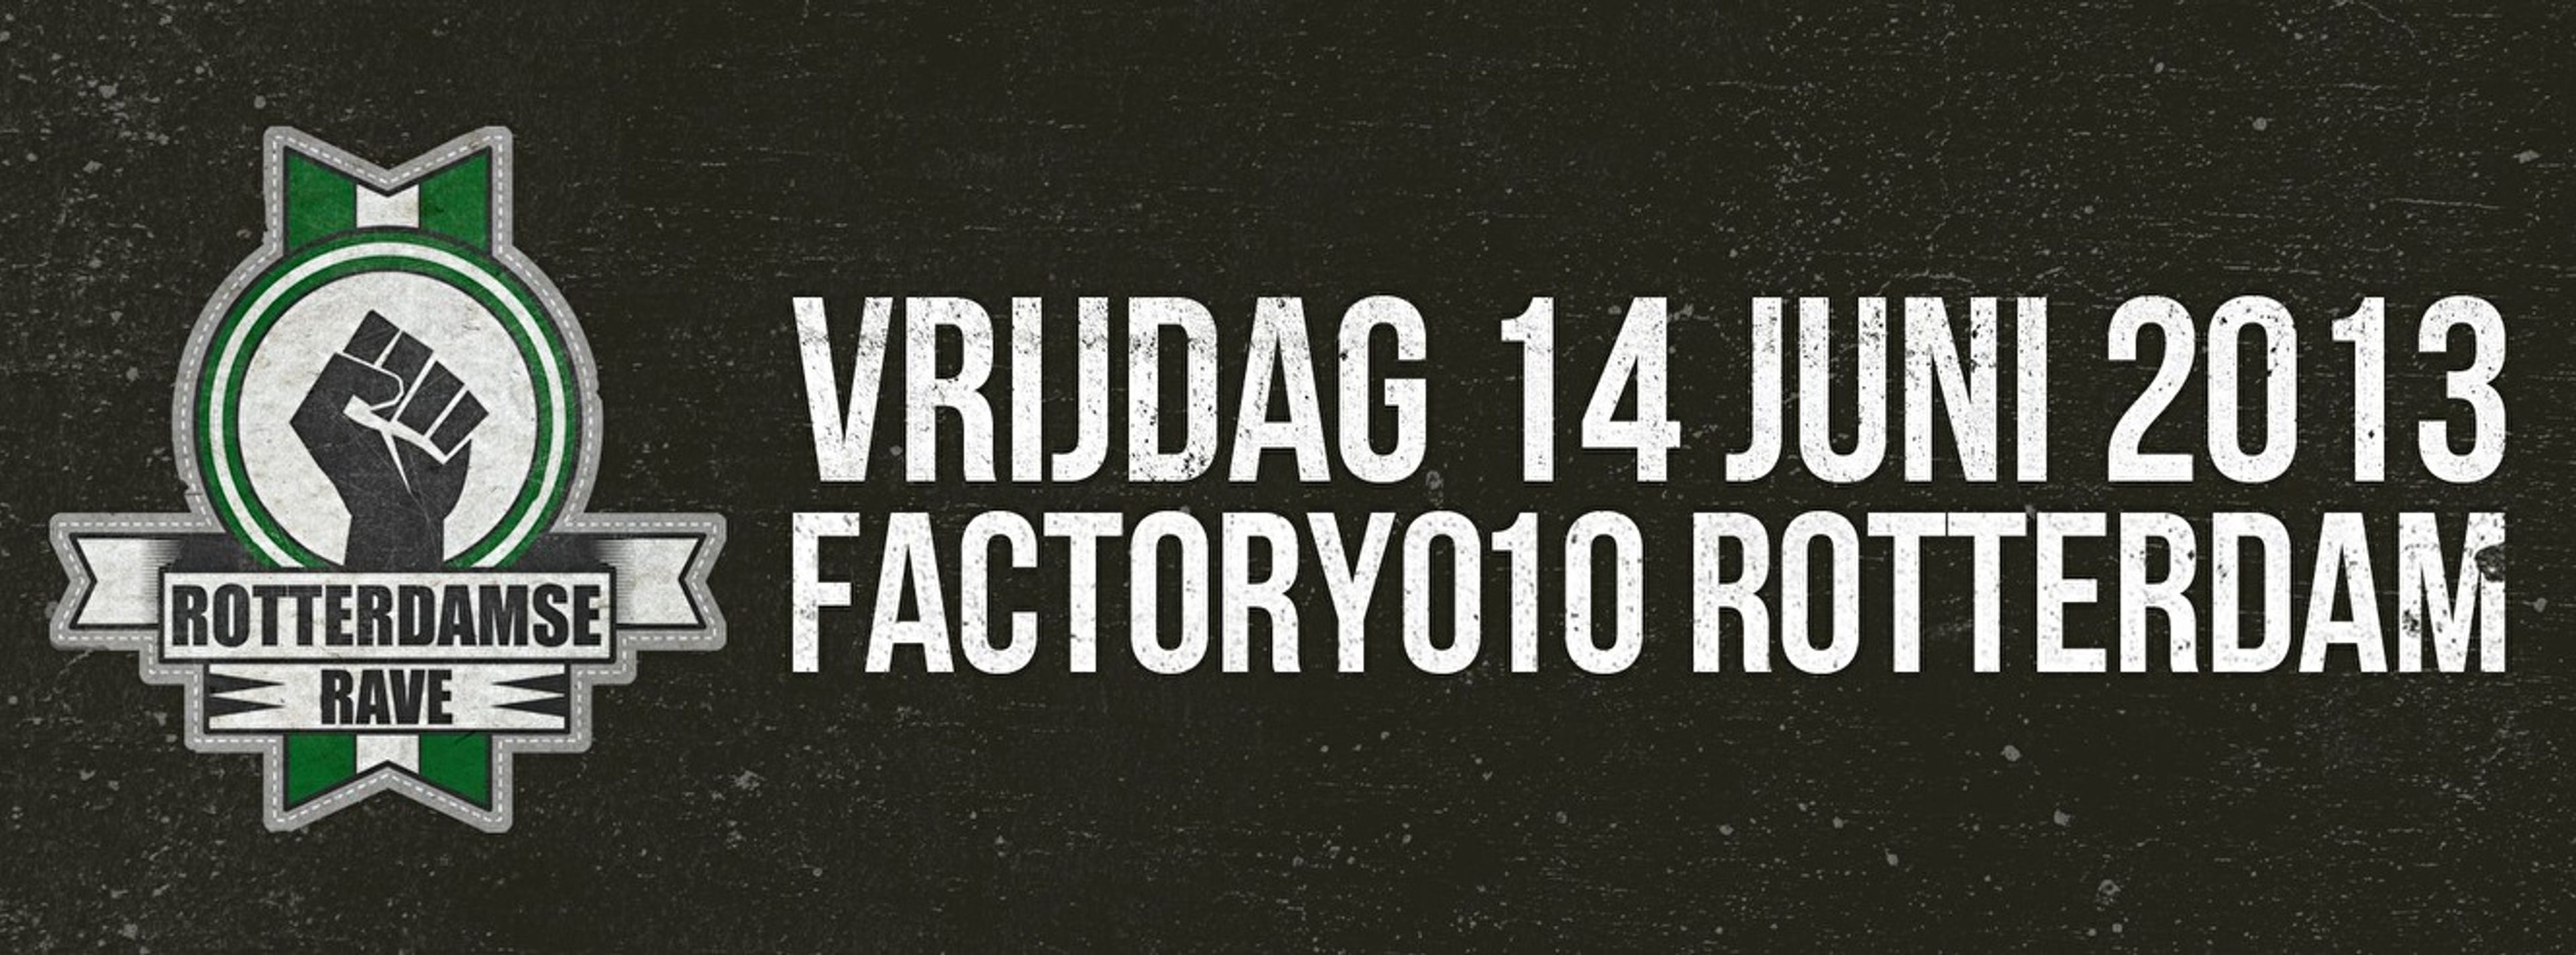 Rotterdamse Rave @ Factory010